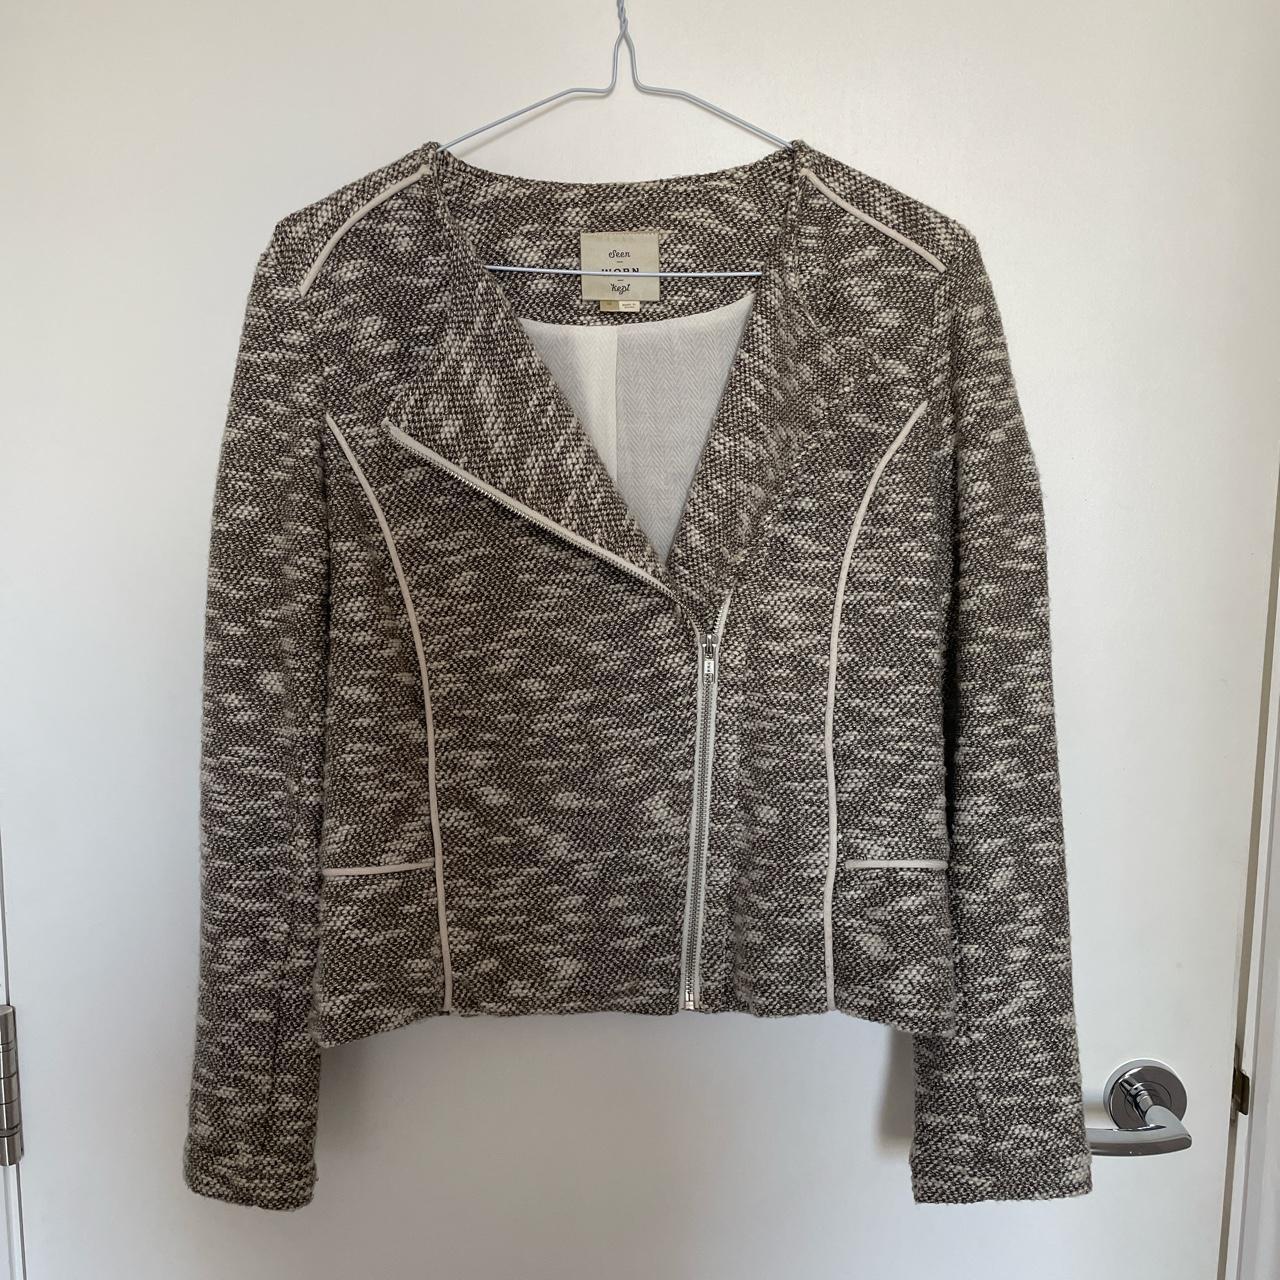 Silver / grey bouclé bomber style jacket 😎 Bomber... - Depop